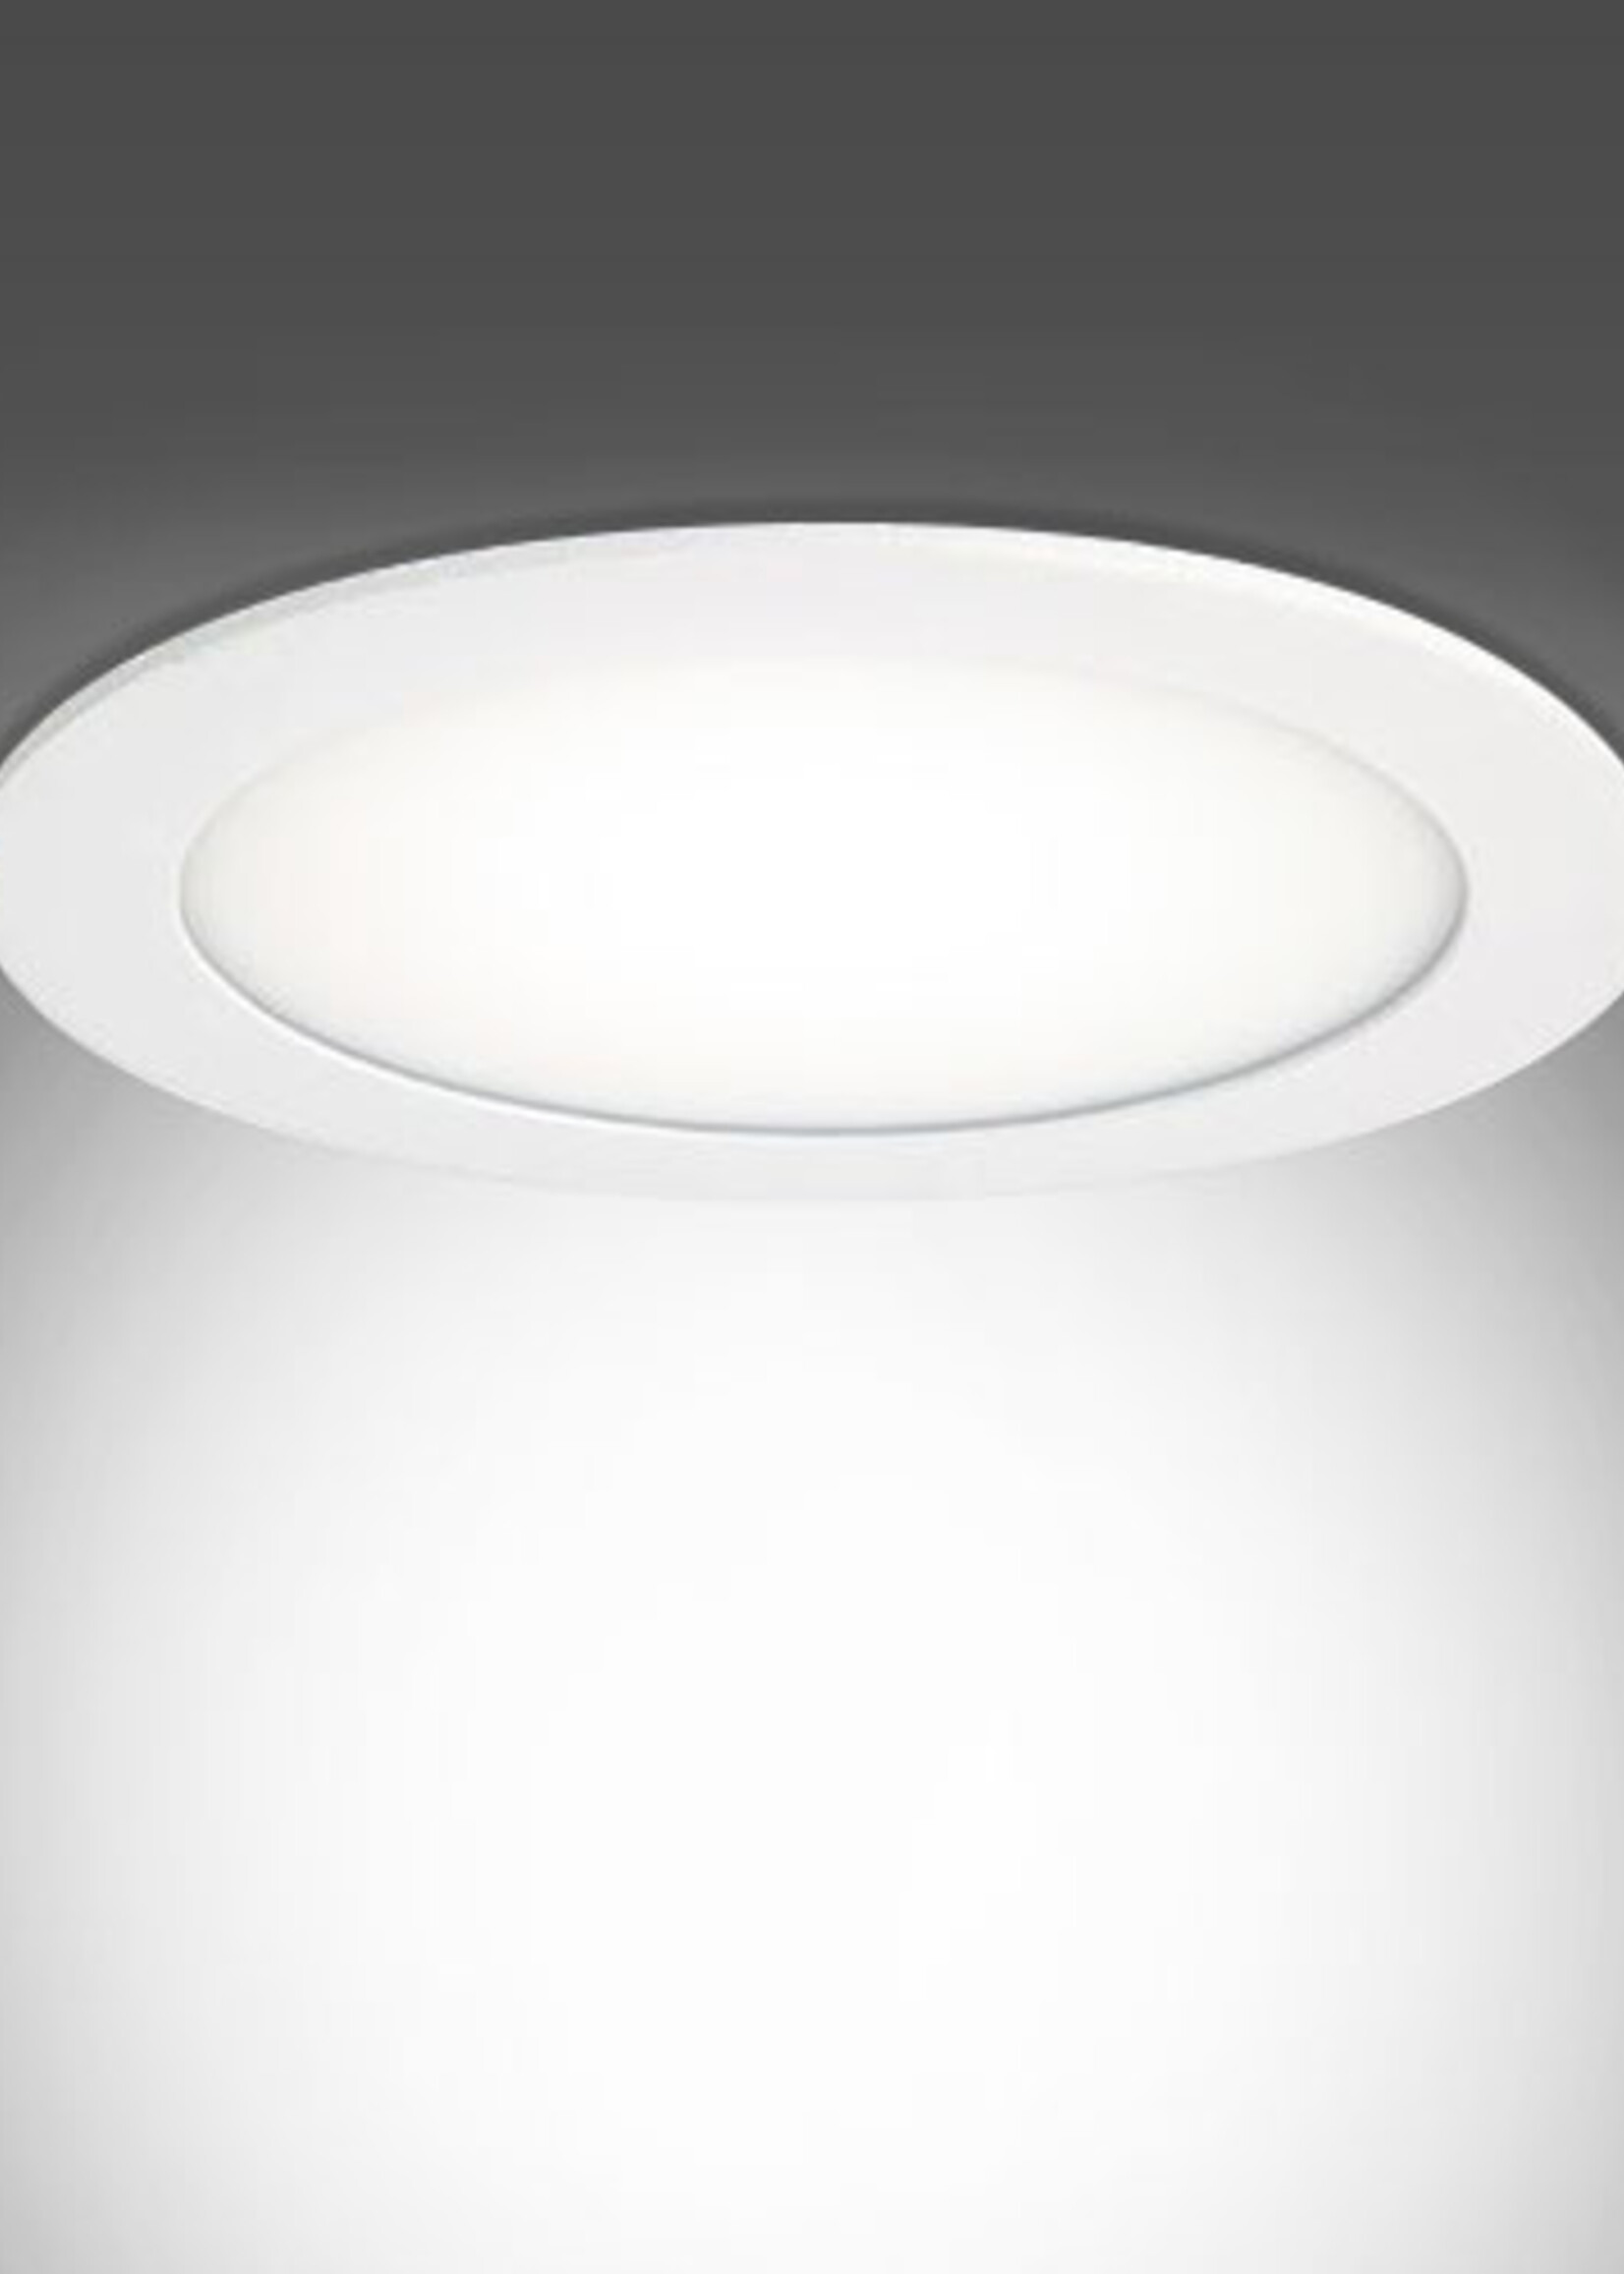 LEDWINKEL-Online LED Downlight ⌀170mm 12W dimbaar inbouw